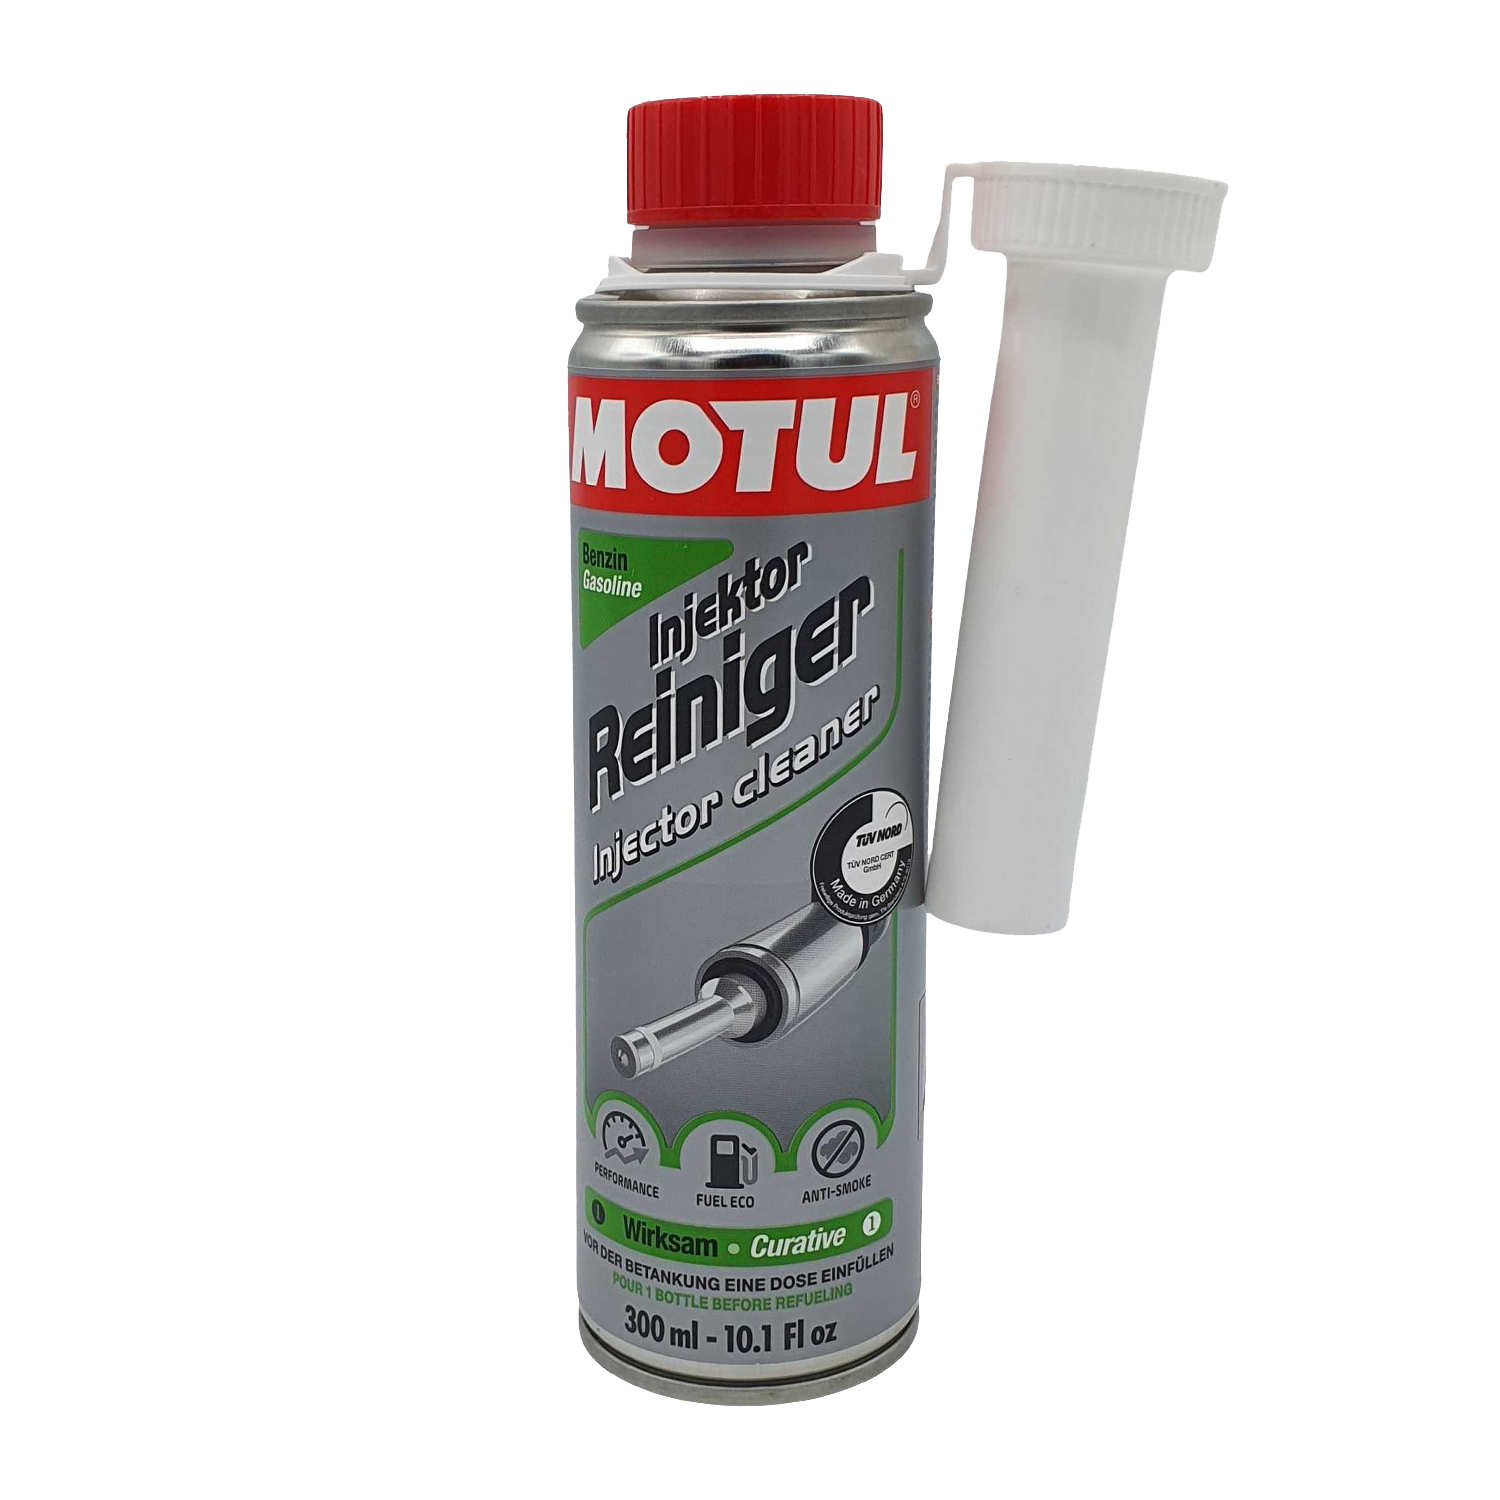 Motul Benzin Injektor Reiniger, Kraftstoffsystem, Additive / Zusätze, Schmierstoffe